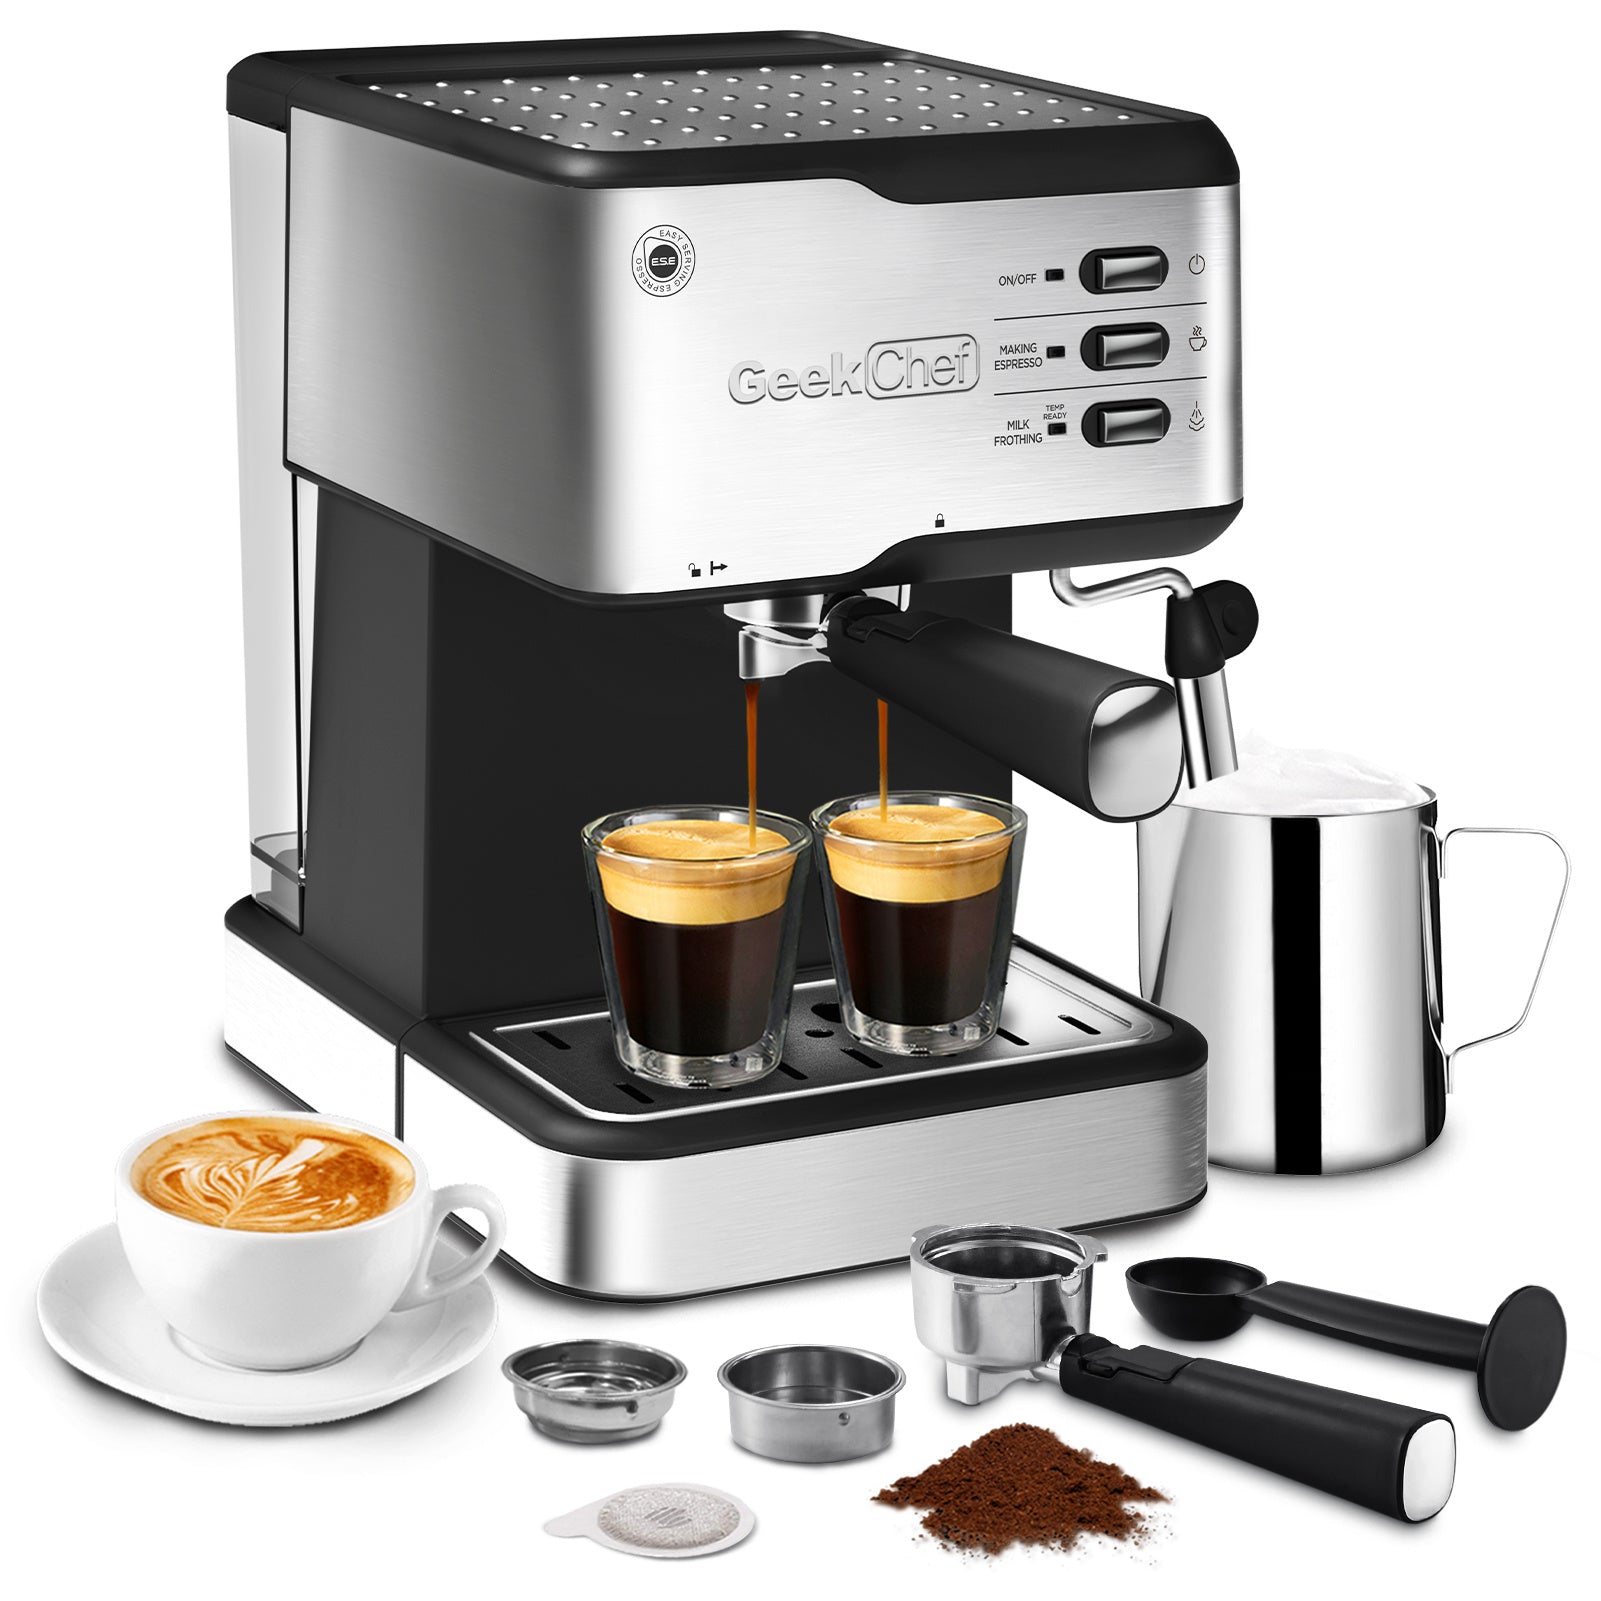 Geek Chef Espresso Machine Compatible With POD Brewing